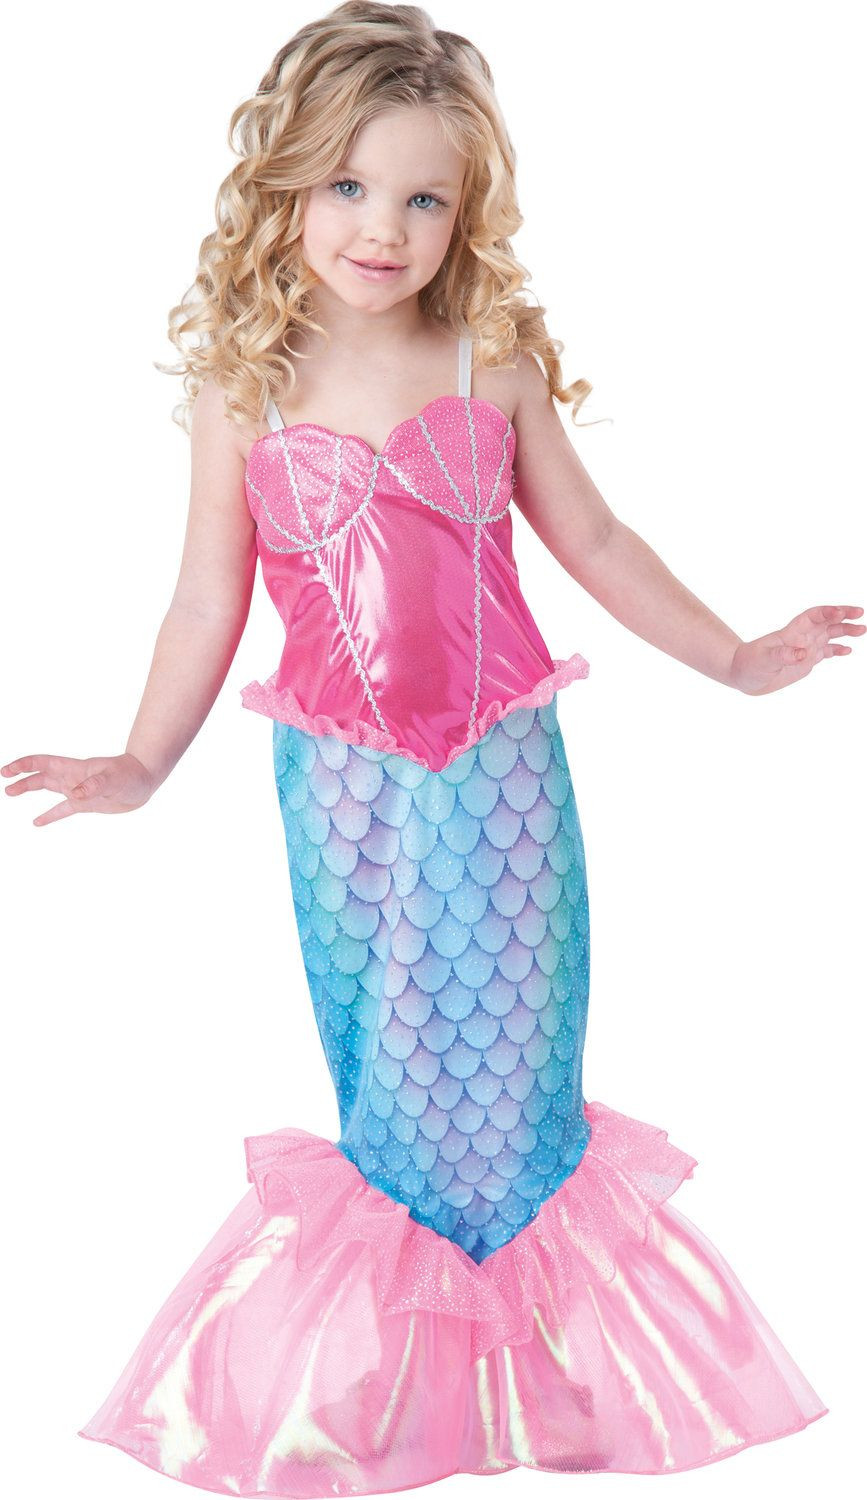 DIY Mermaid Costume Toddler
 child mermaid costume